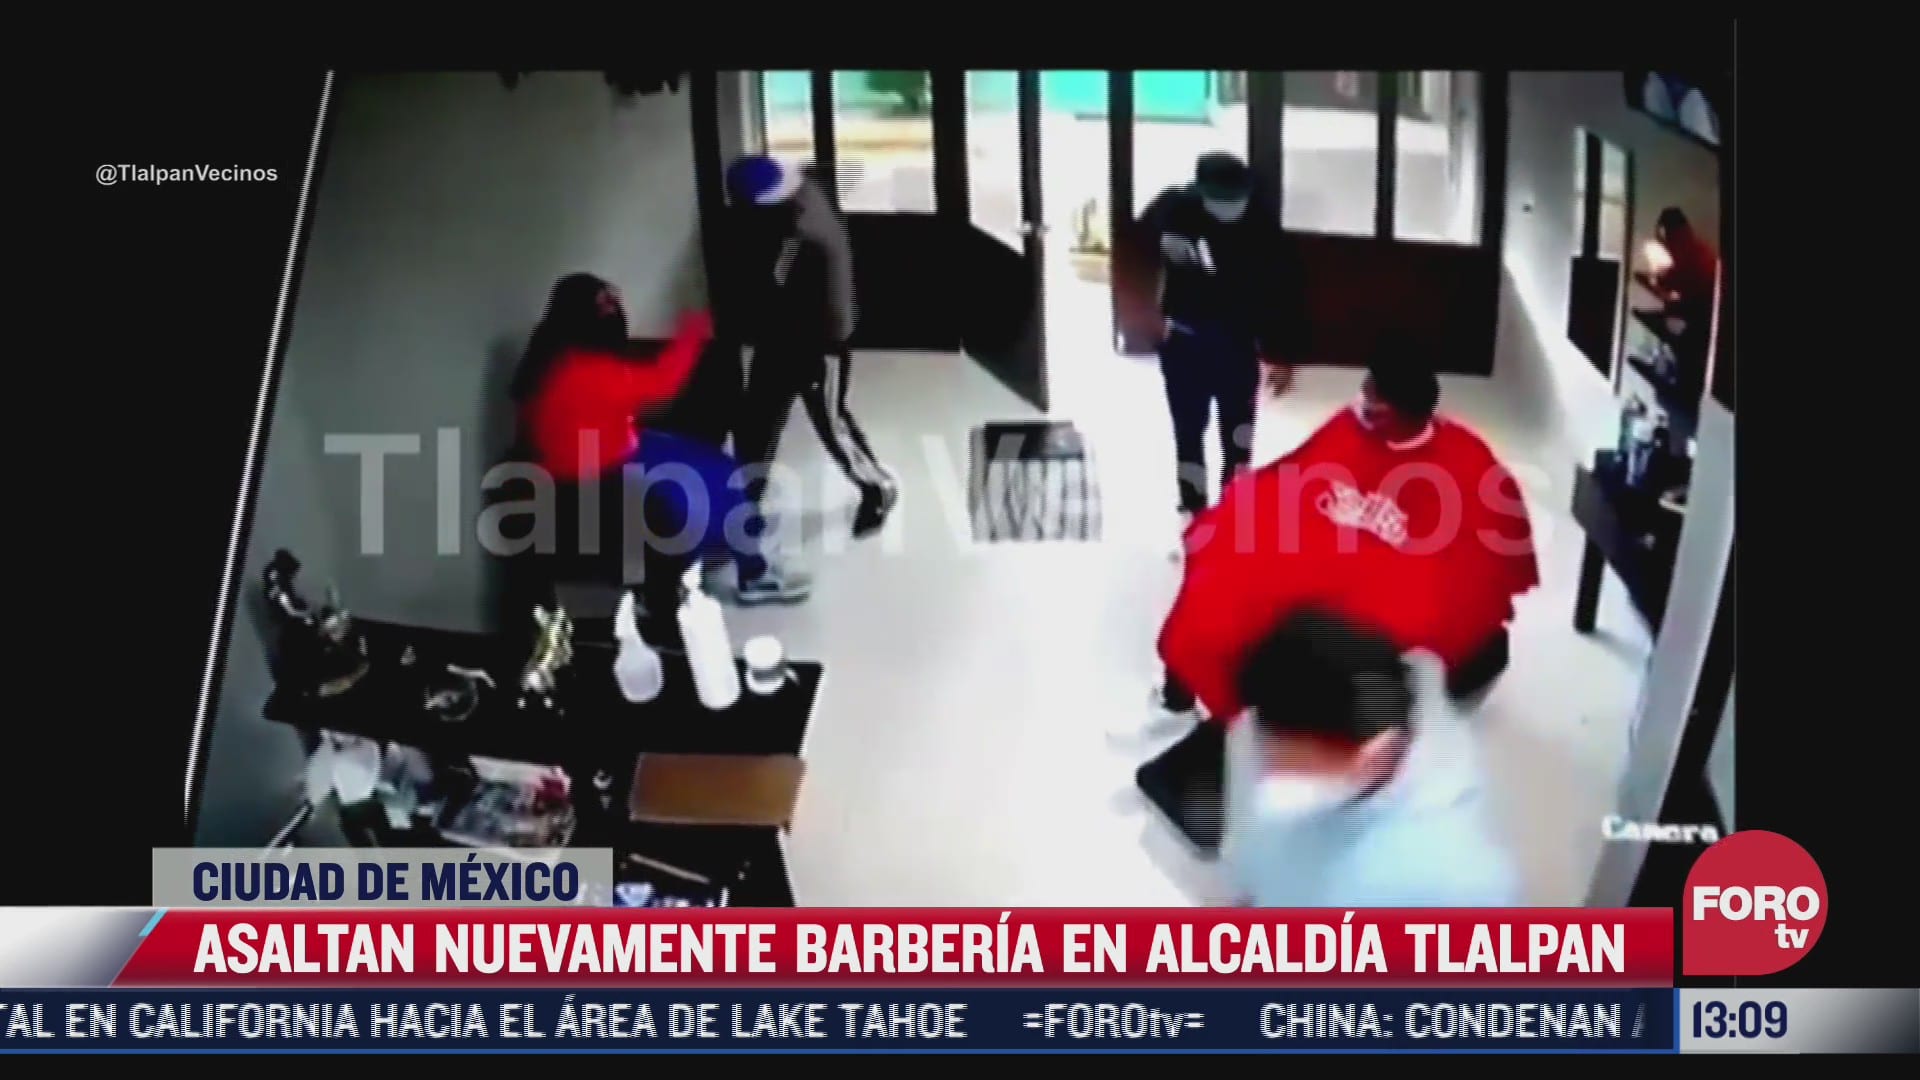 video camaras de seguridad captan asalto a barberia en alcaldia tlalpan cdmx